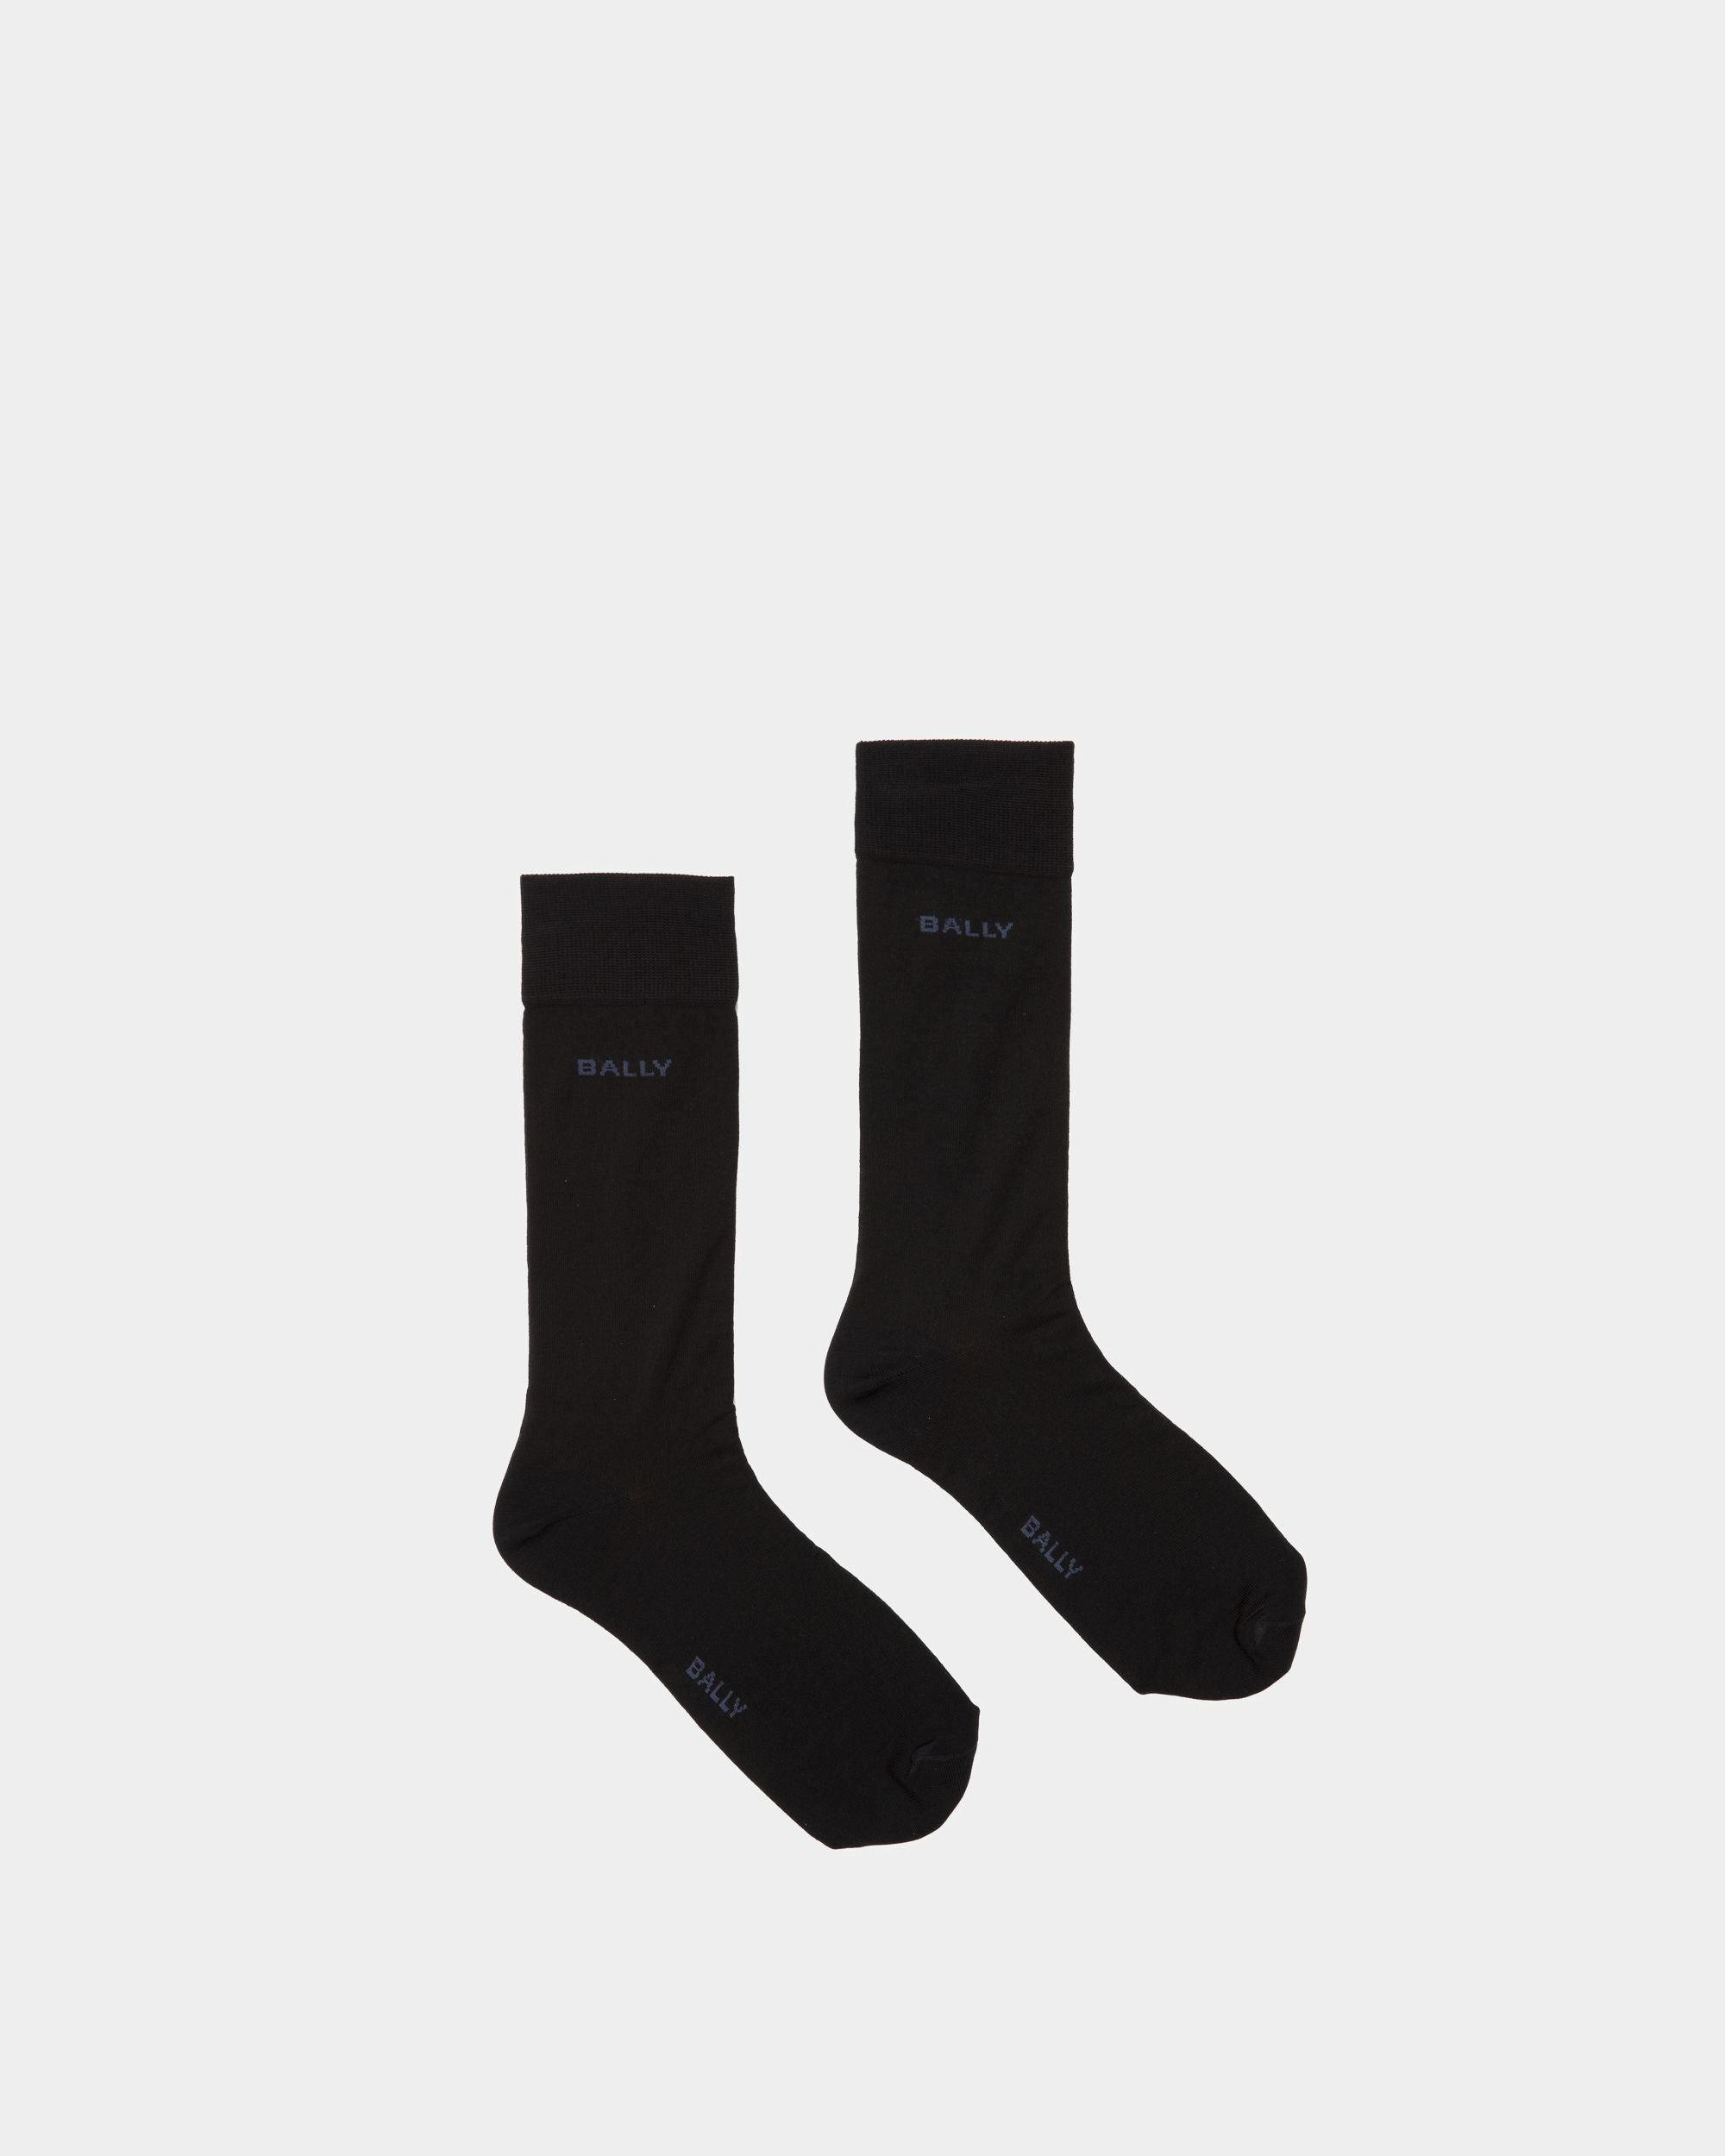 Ribbed Logo Socks | Men's Socks | Ink And Indigo Cotton Mix | Bally | Still Life Top